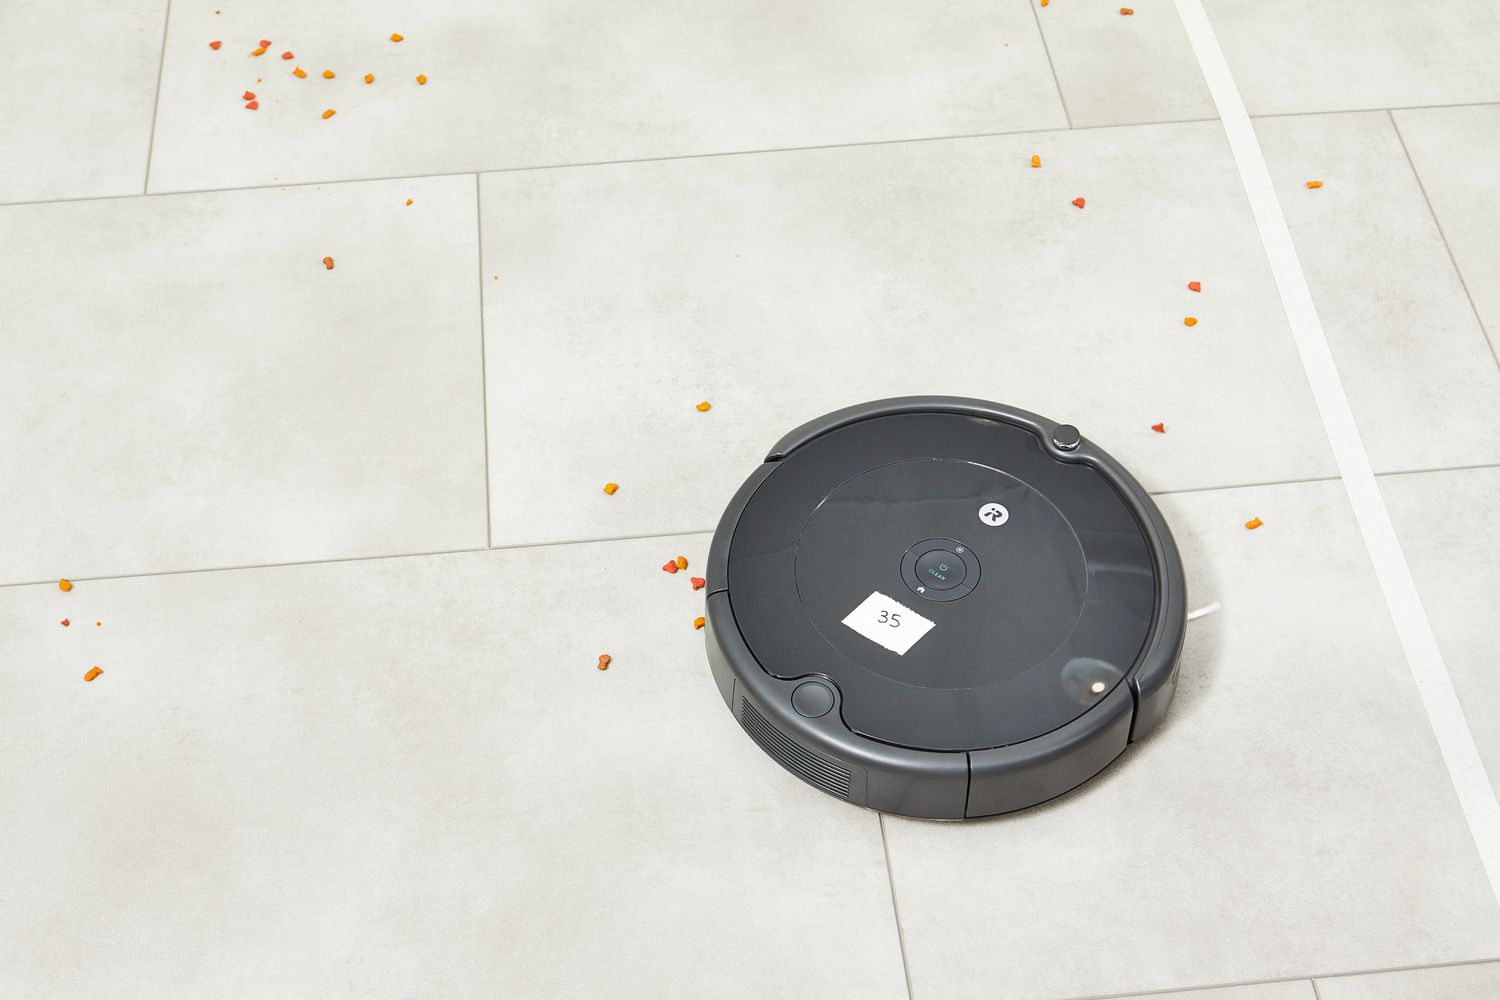 iRobot Roomba 694 Robot Vacuum cleaning food from tile floor